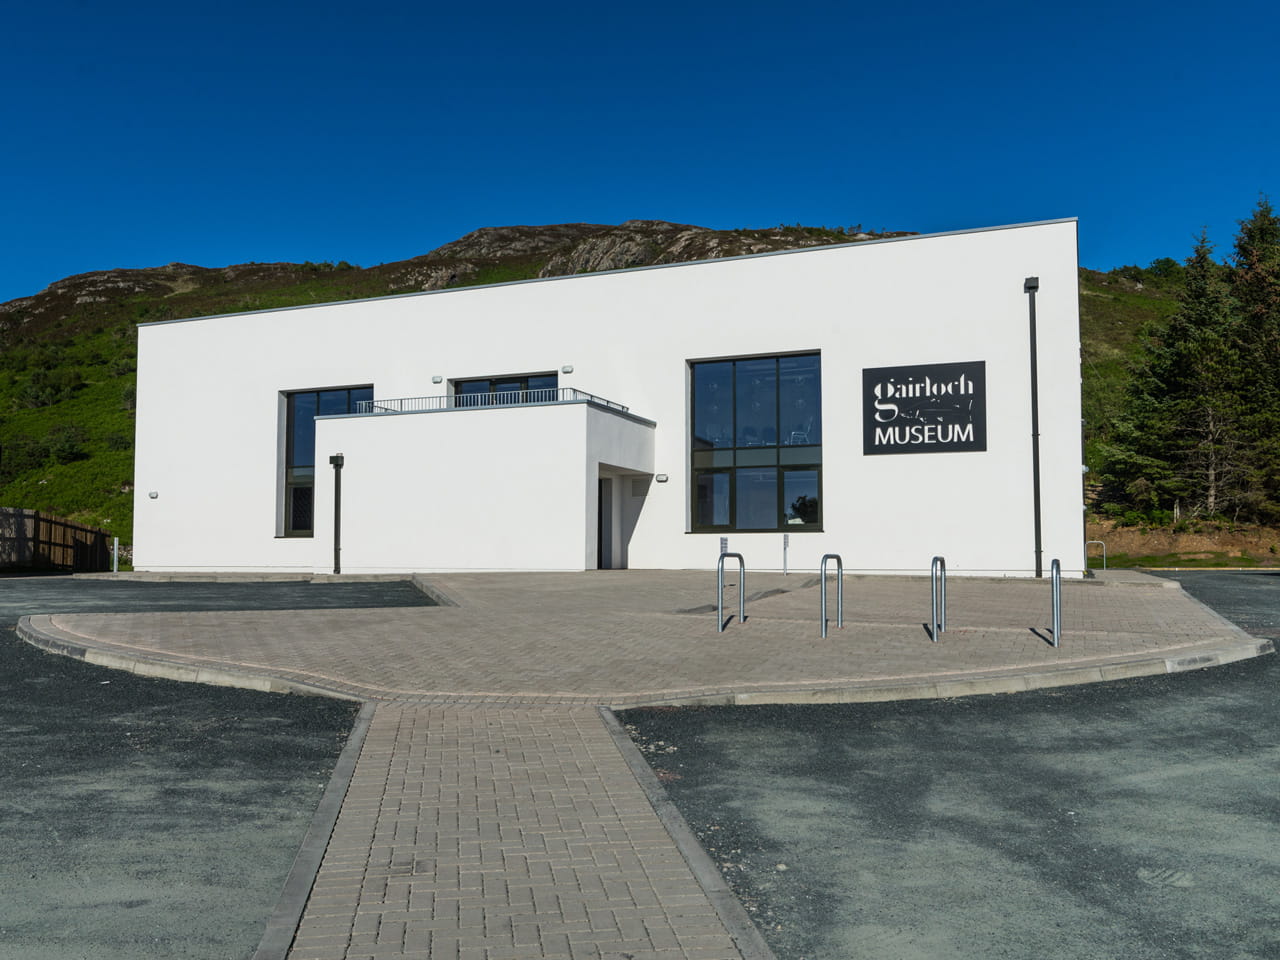 Gairloch Heritage Museum